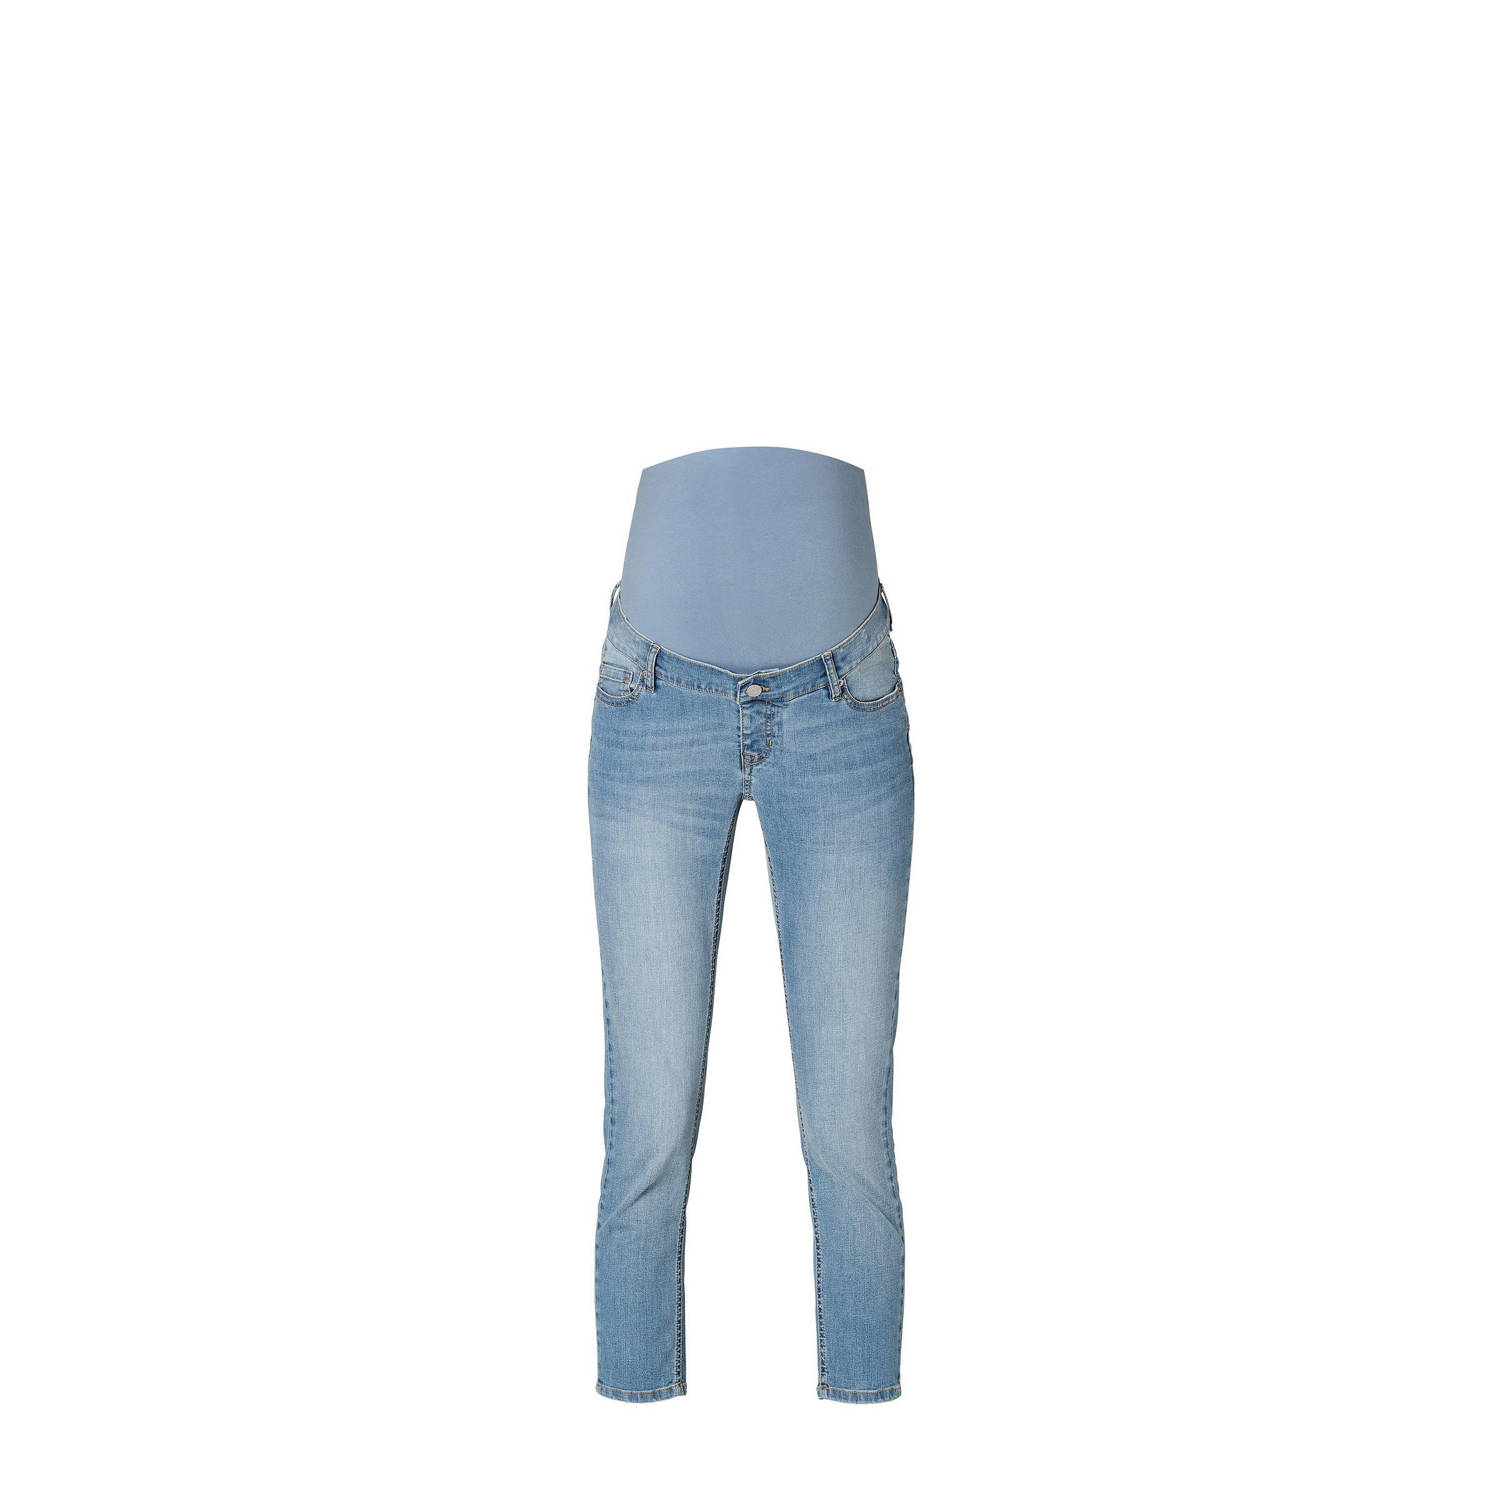 Noppies cropped zwangerschaps slim fit jeans Mila vintage blue